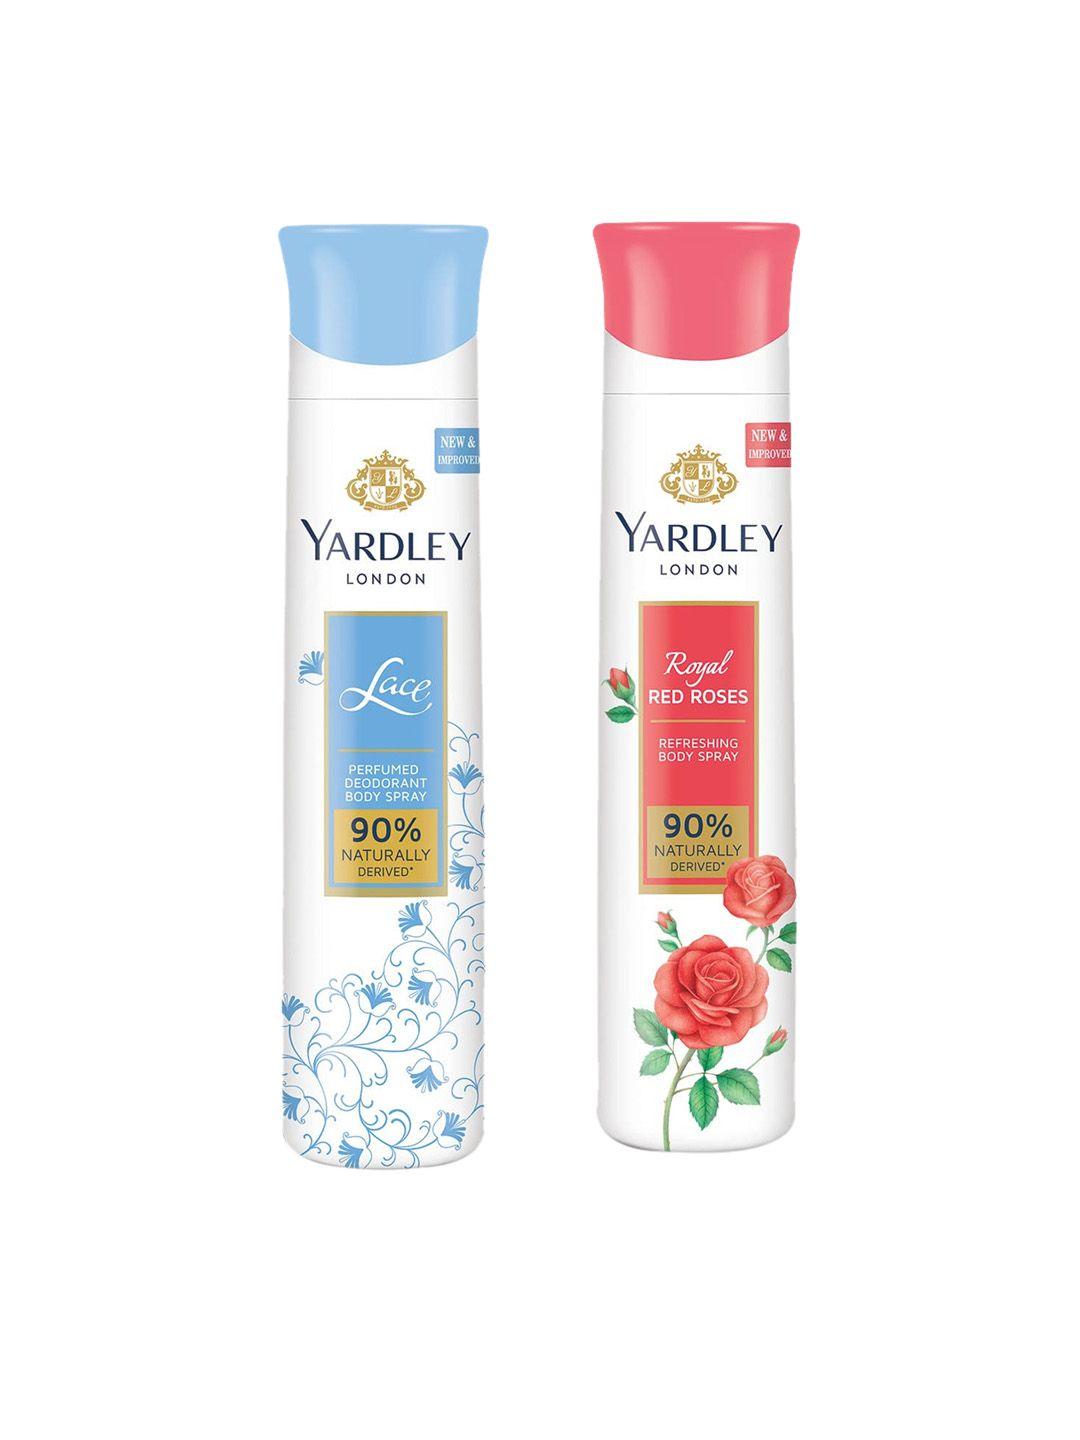 yardley-london-set-of-2-perfumed-deodorant-body-spray-lace-&-royal-red-rose---150-ml-each